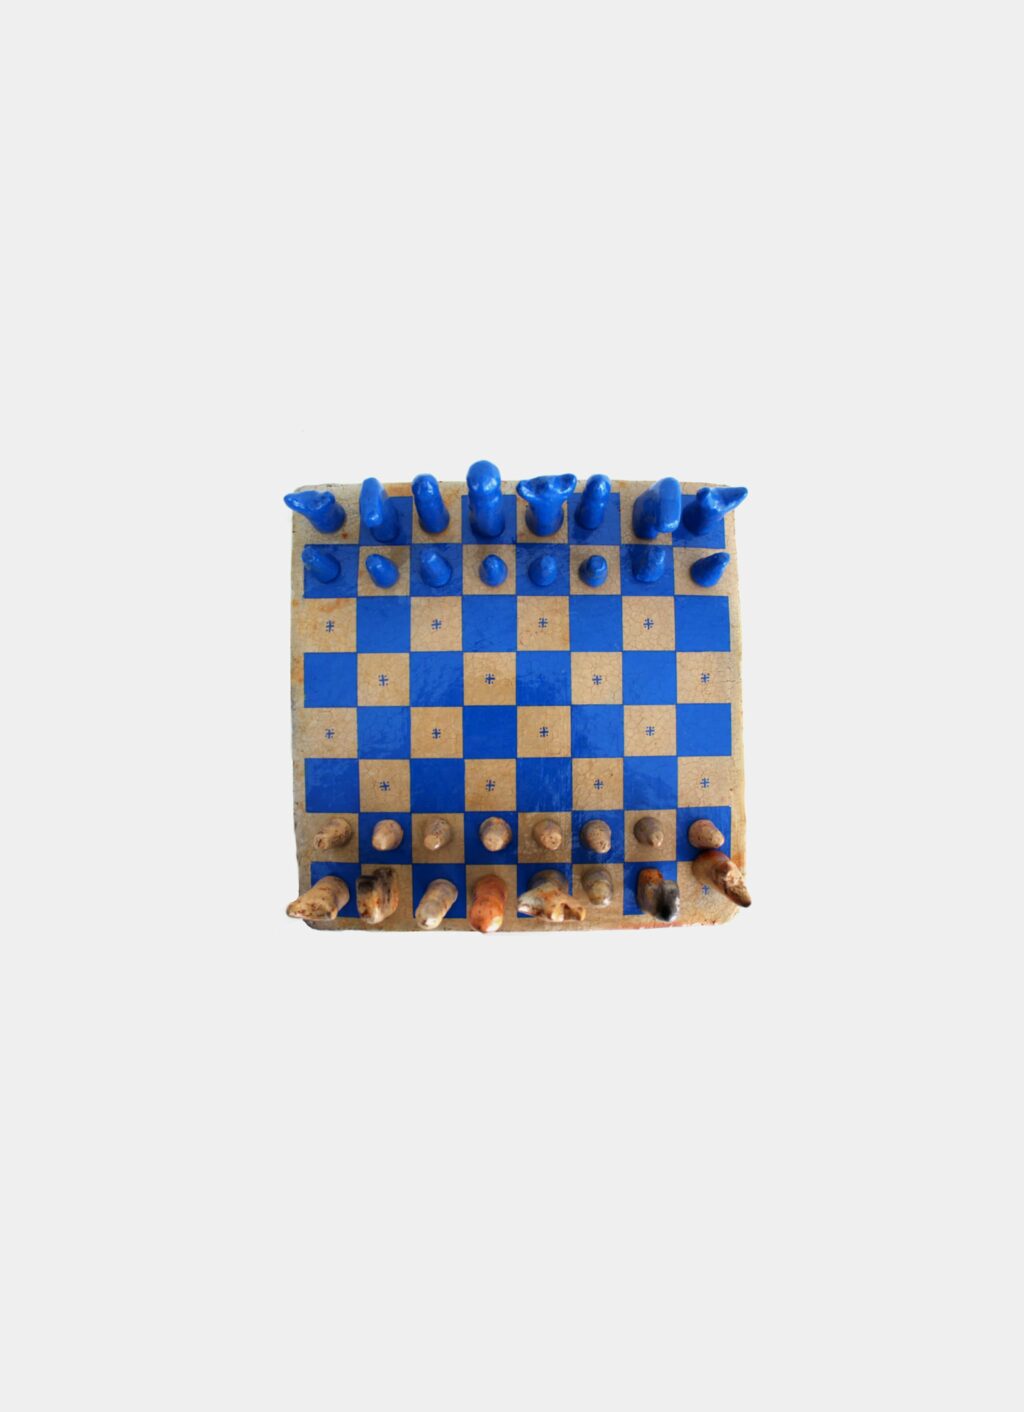 Flayou - Chich-Bich - Terracotta - Chess - Neon blue